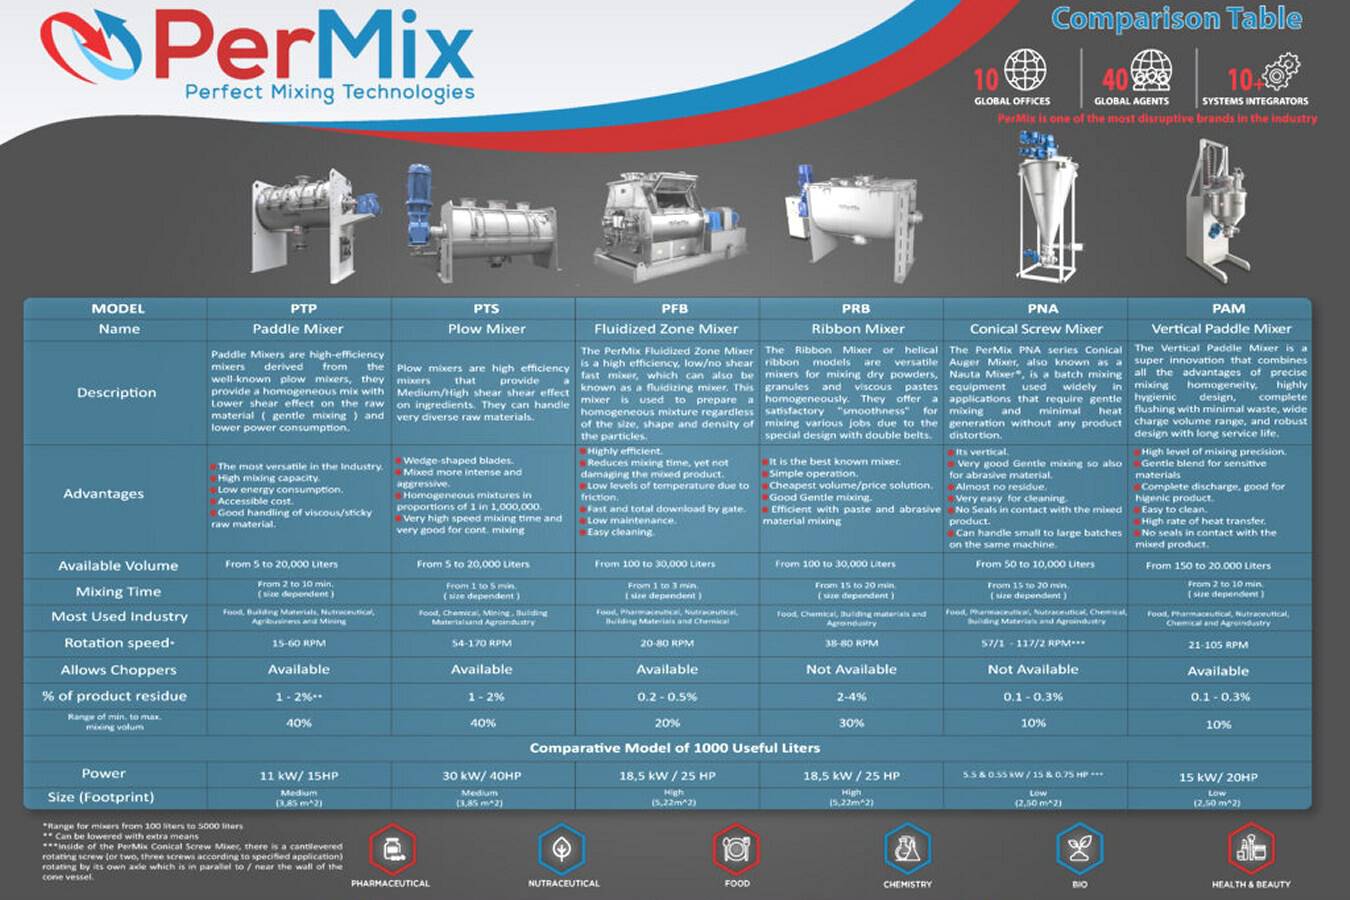 Comparison chart for powder mixers